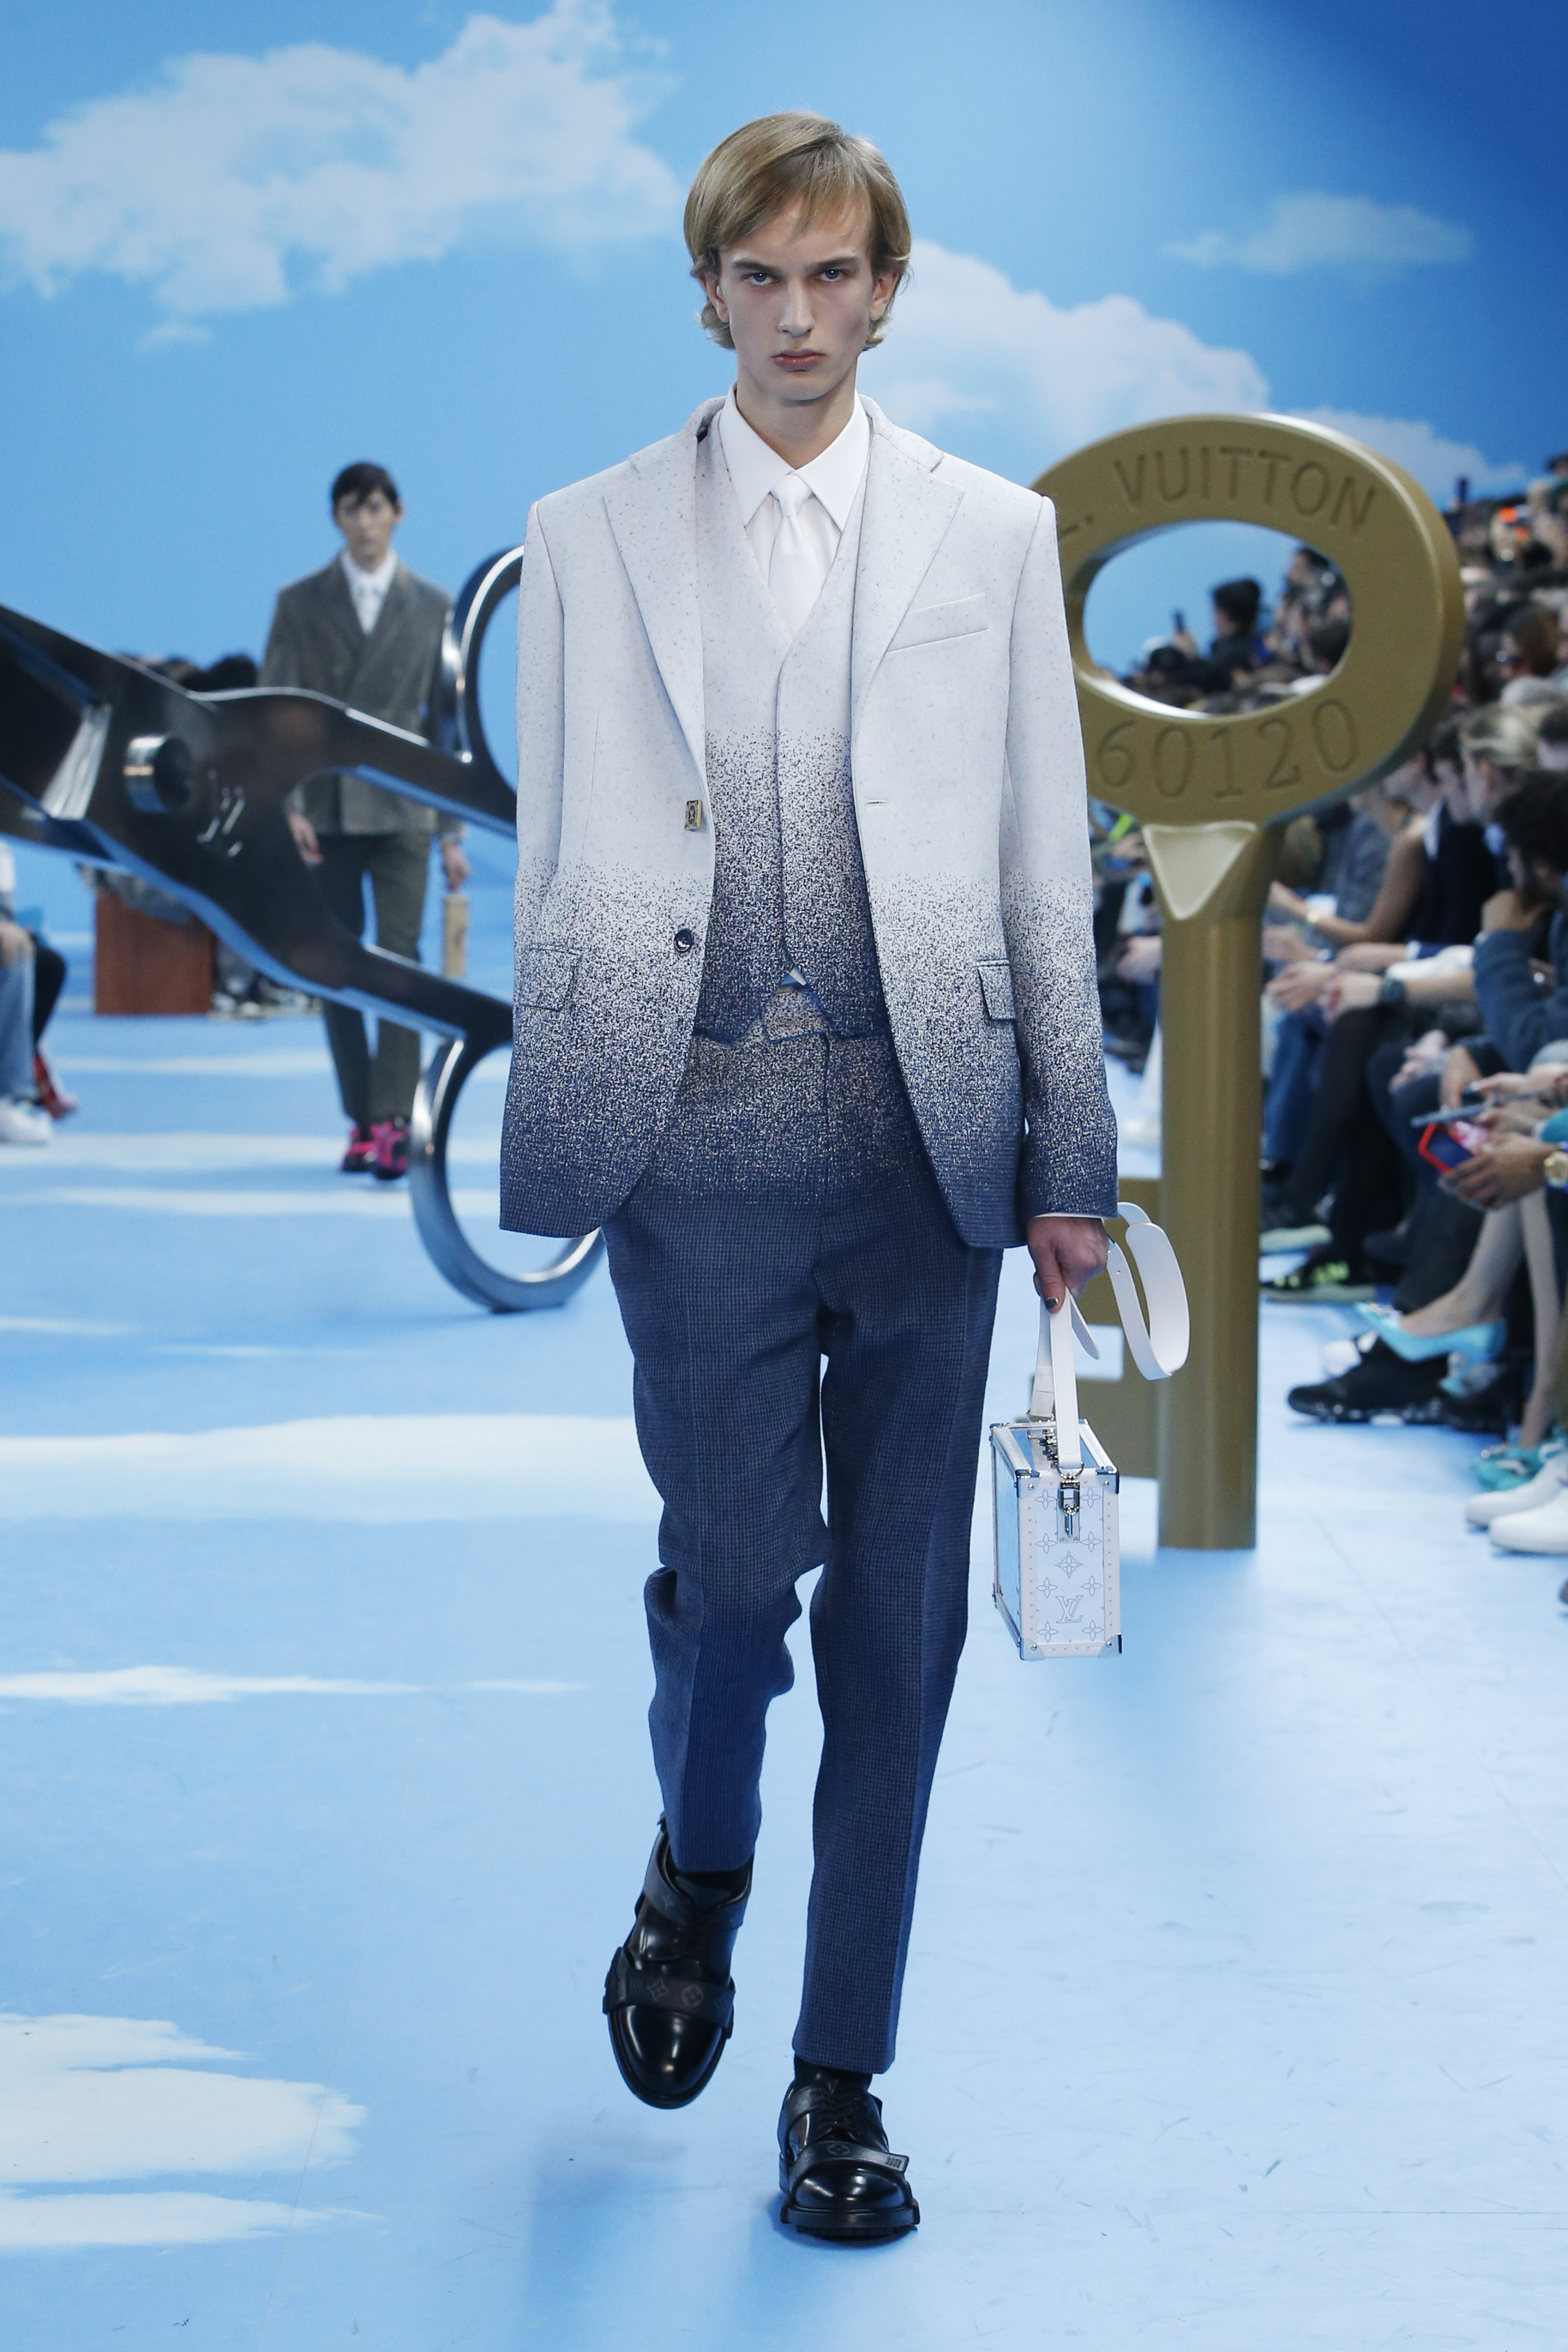 Paris Fashion Week Men's Delivered The Very Best In Sartorial Design - ICON